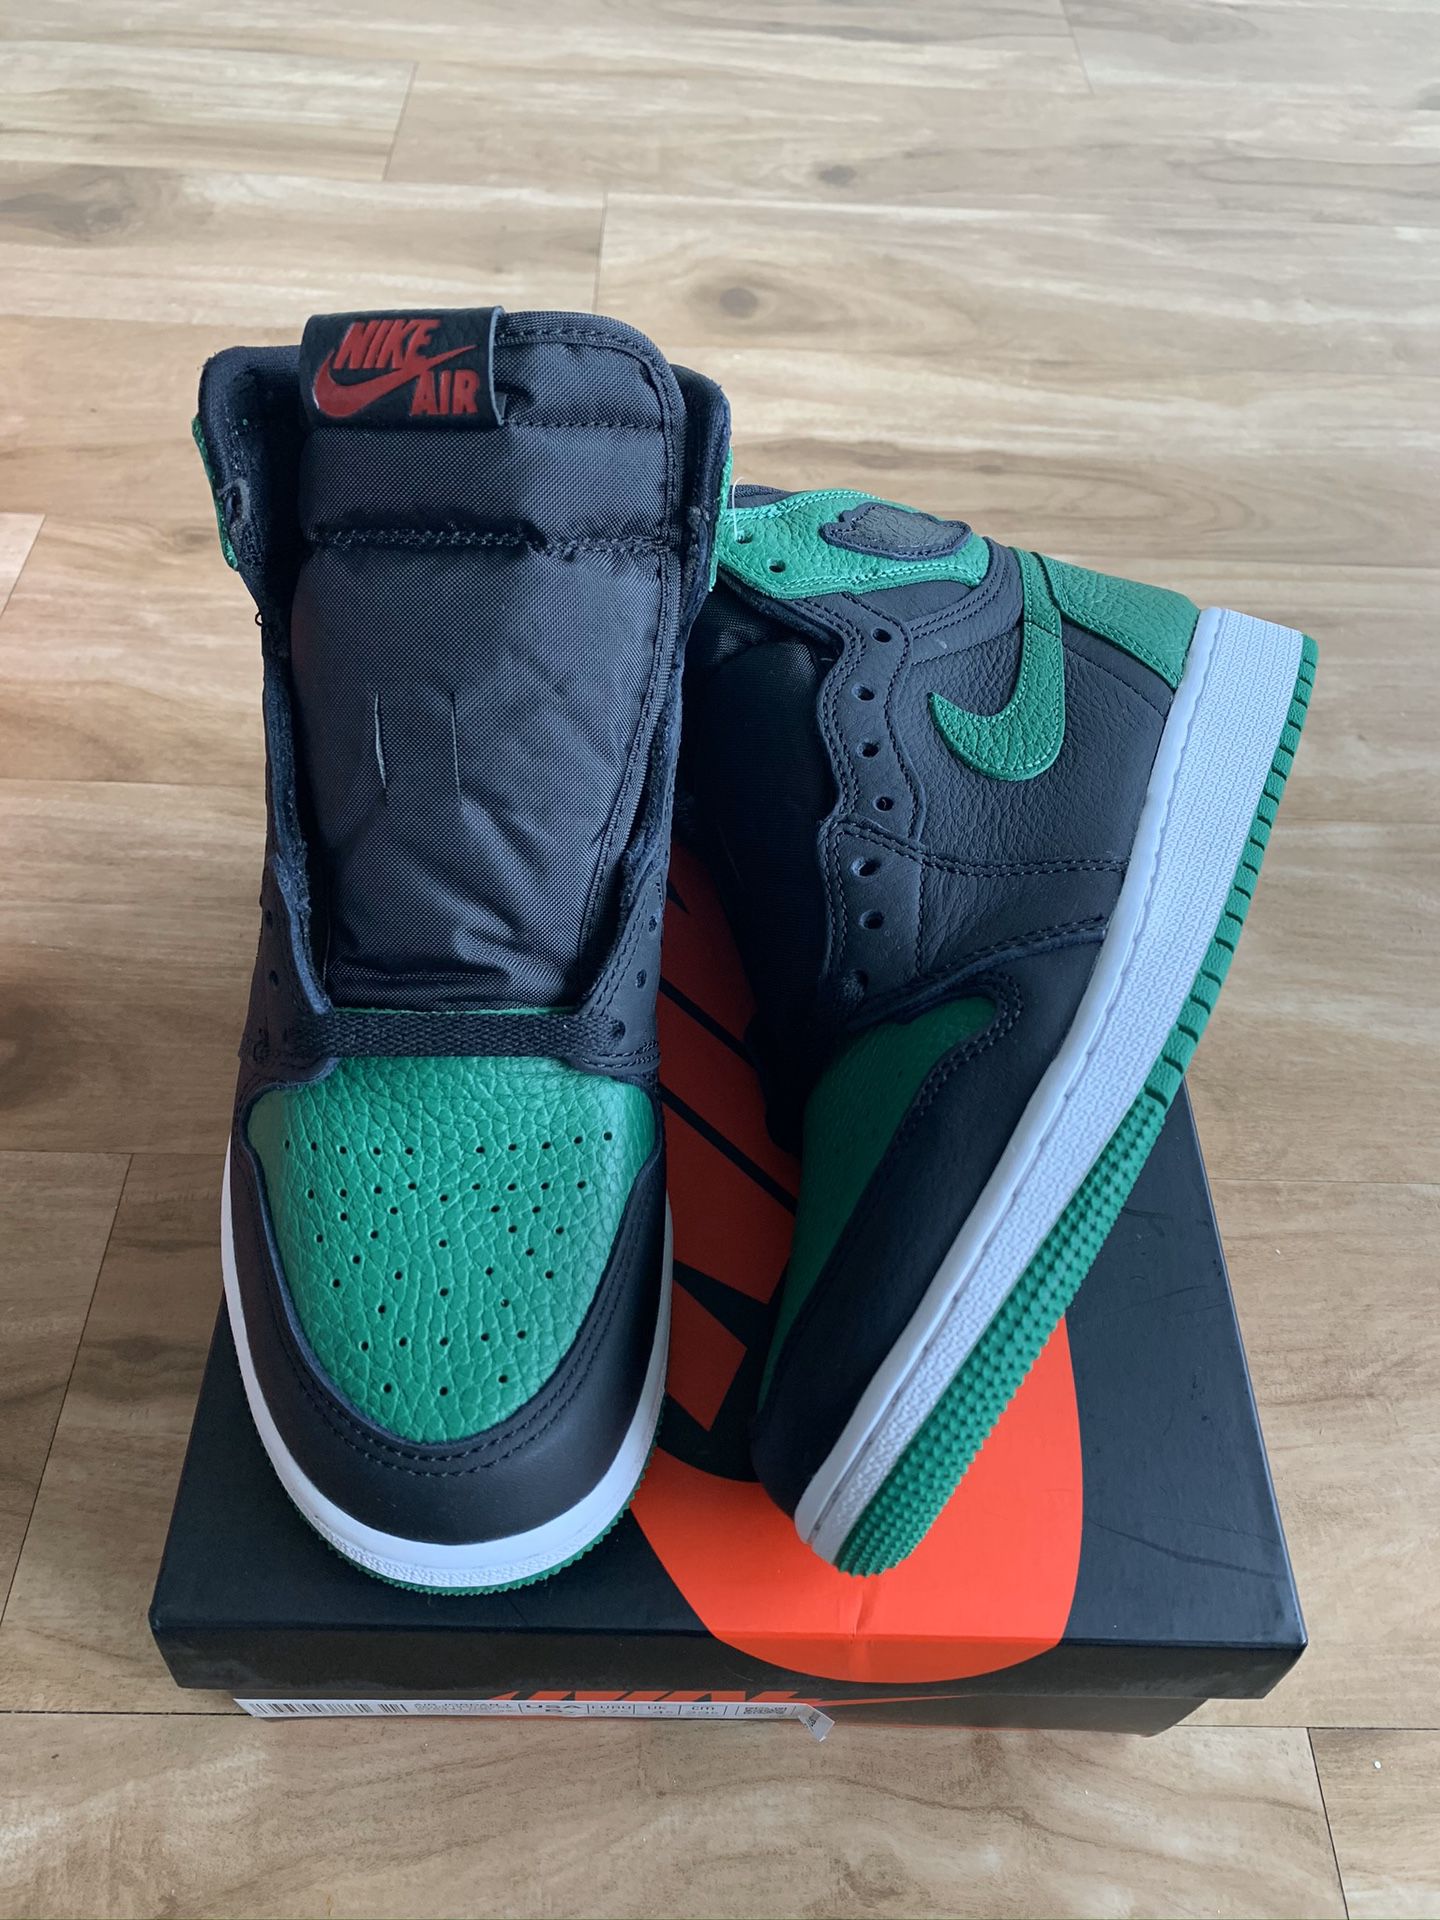 Air Jordan Retro 1 “Pine Green 2.0” Size 5y